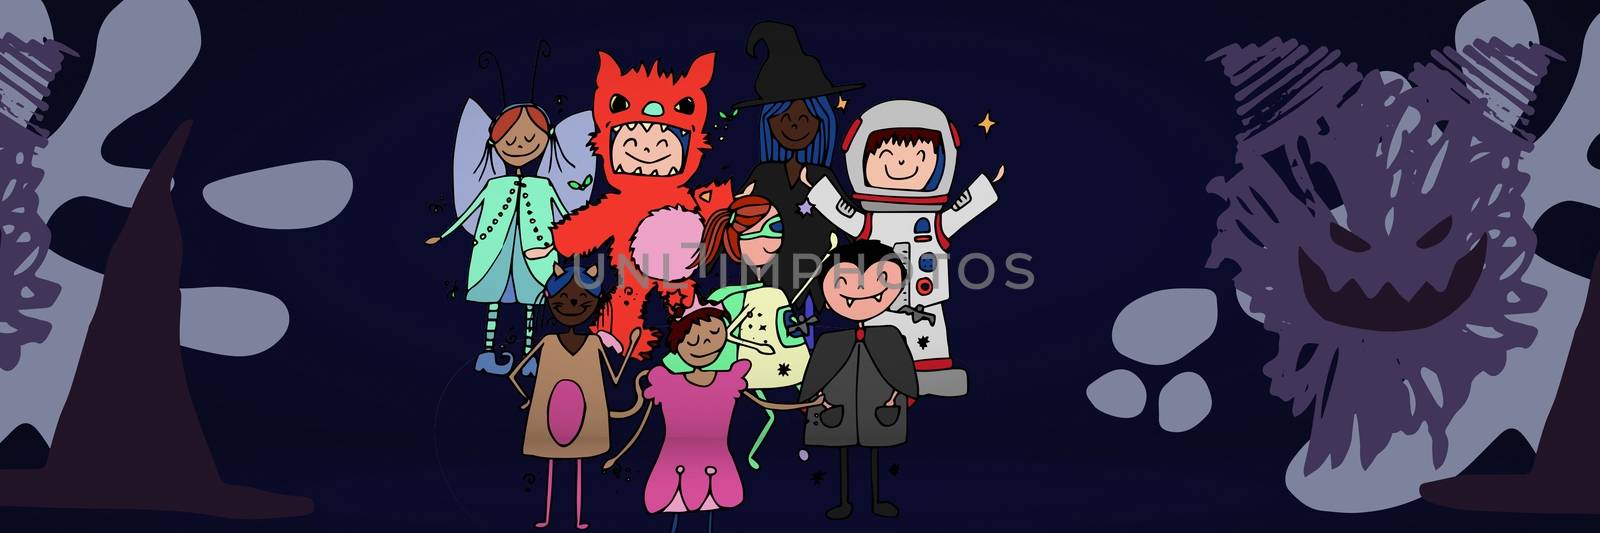 Children's Halloween party illustrations by Wavebreakmedia